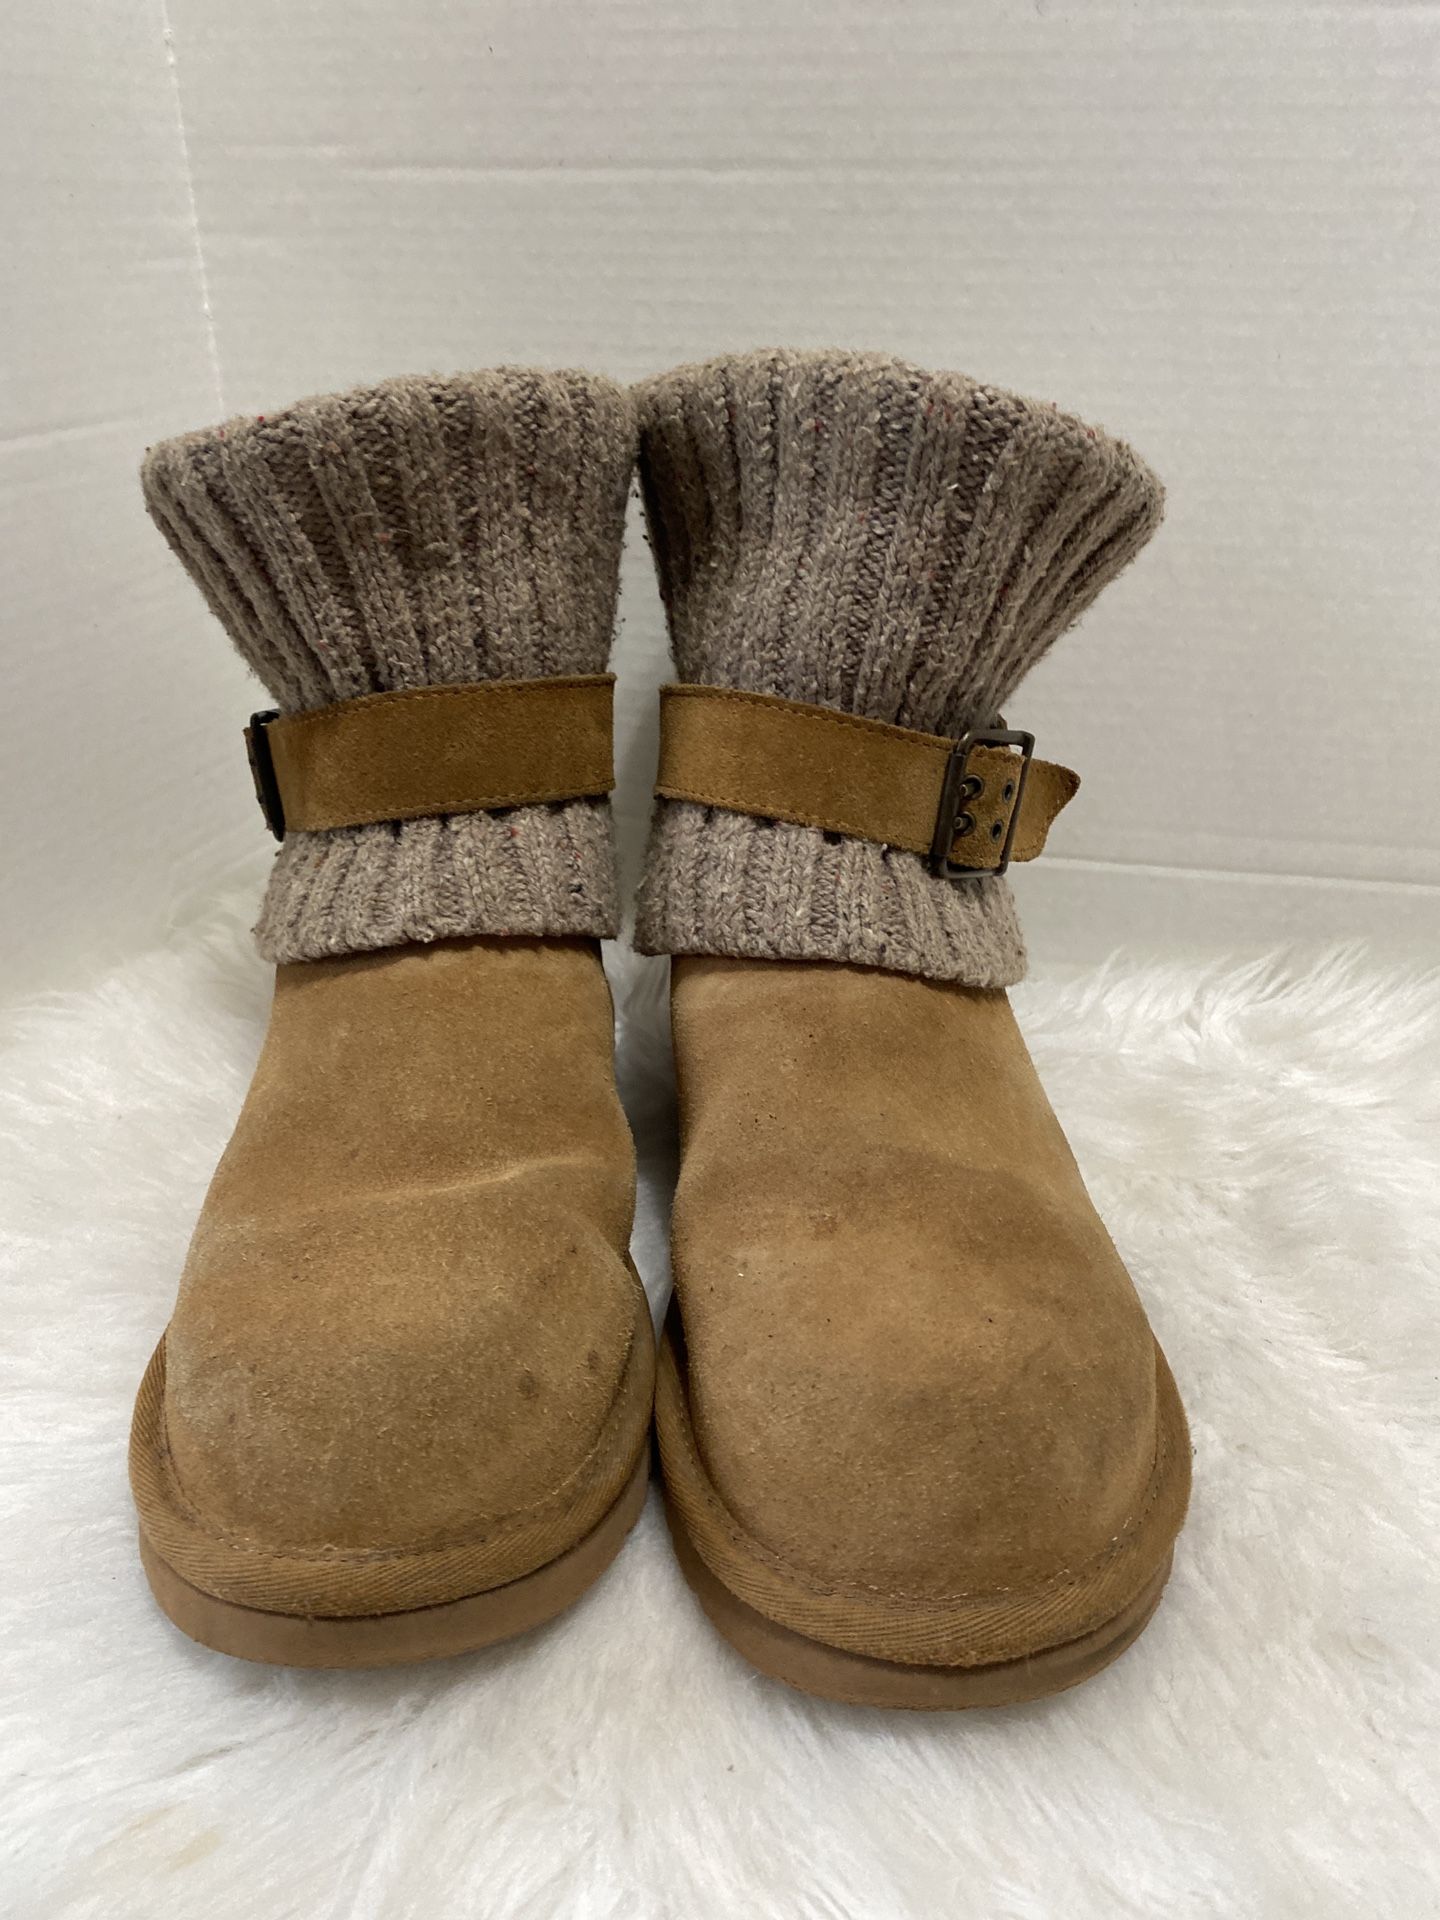 UGG Australia Cambridge Knit 1003175 Women’s Sheepskin Boots Chestnut Size 8